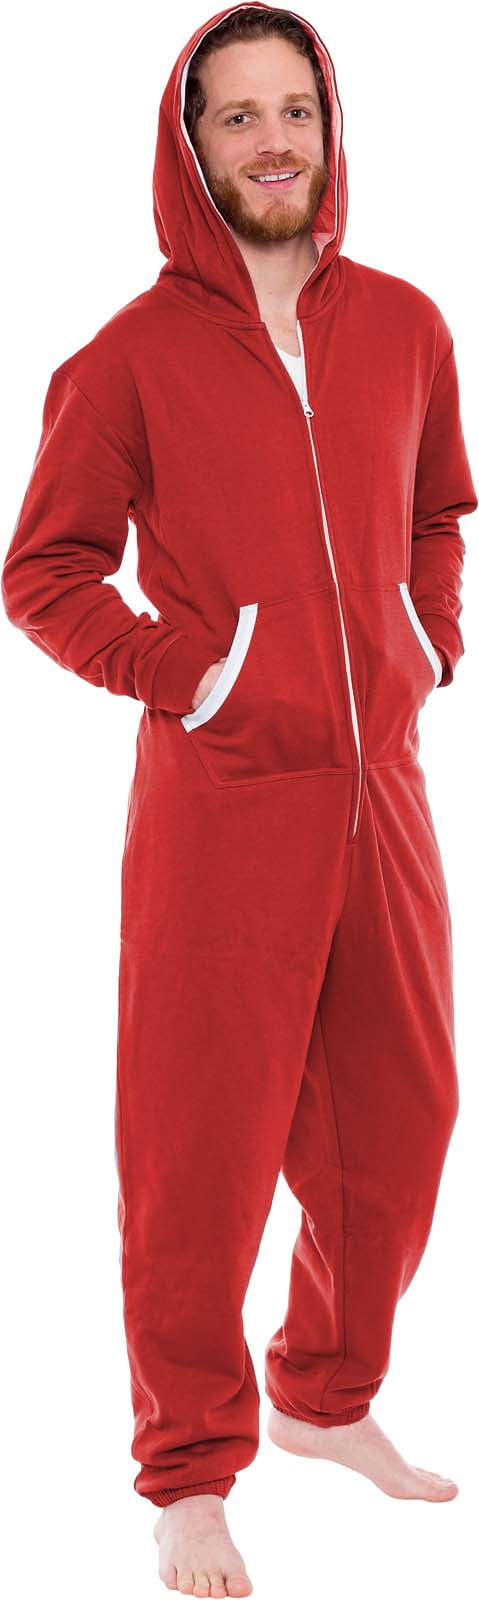 WUAI-Men Unisex Hooded Onesie Jumpsuit Romper Overall Zip up One Piece Pajama Playsuit Sportswear 